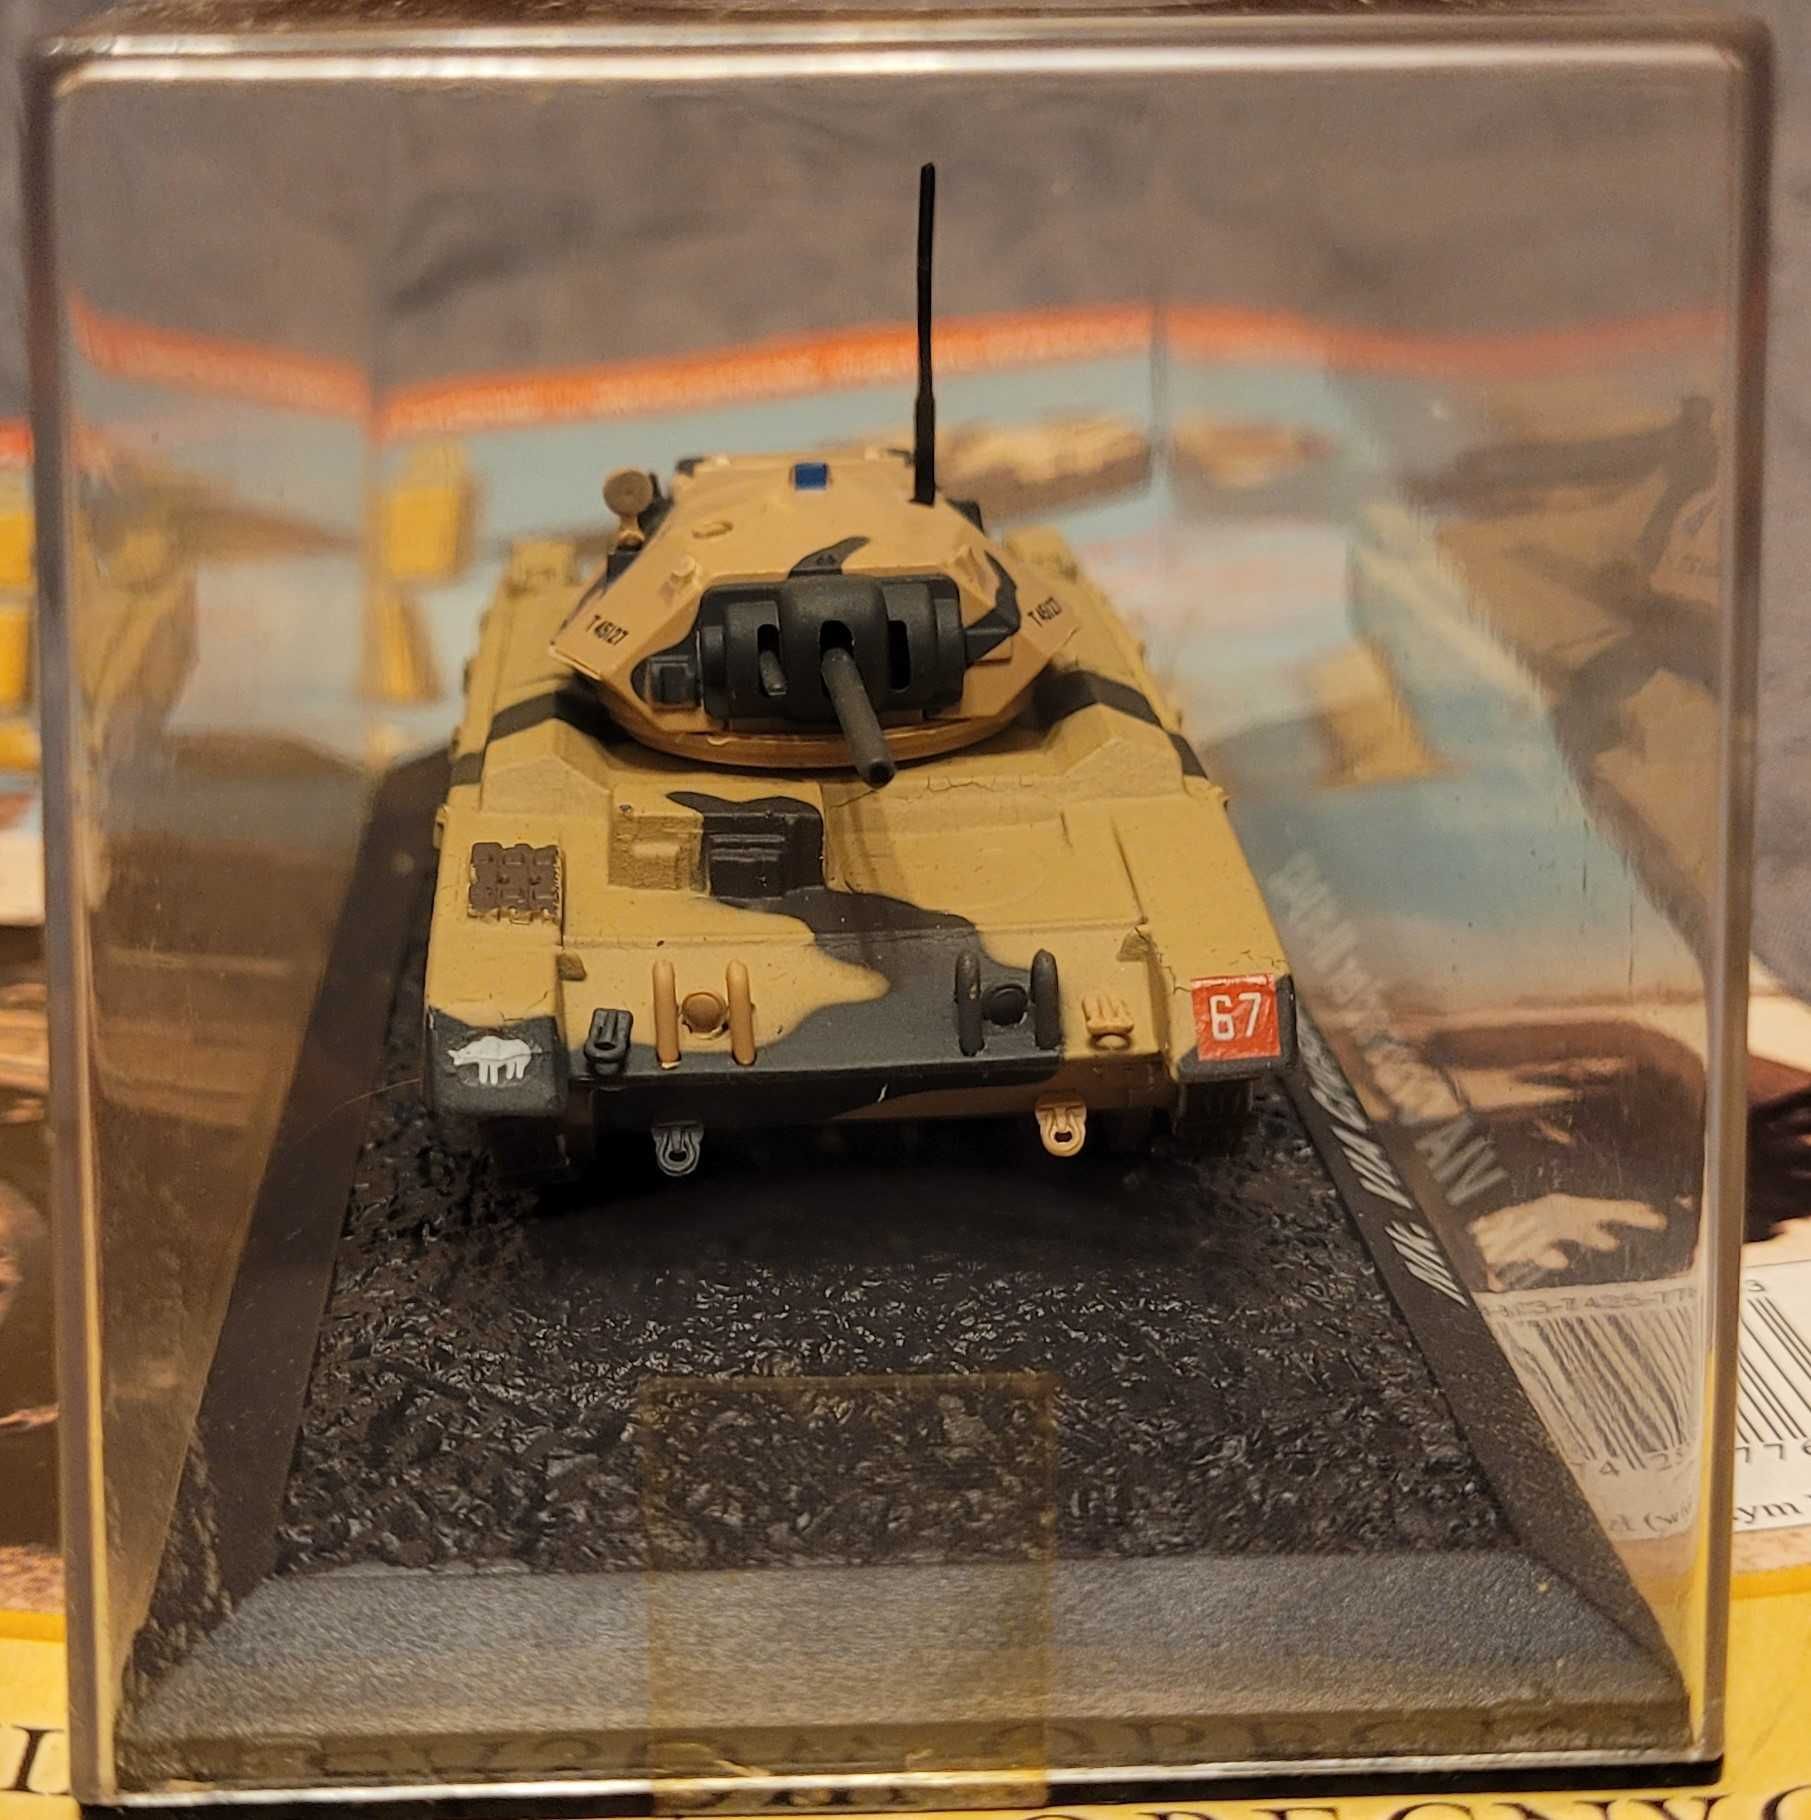 Cruiser Tank Mk VIA Crusader II Kolekcja Czołgi Świata 11